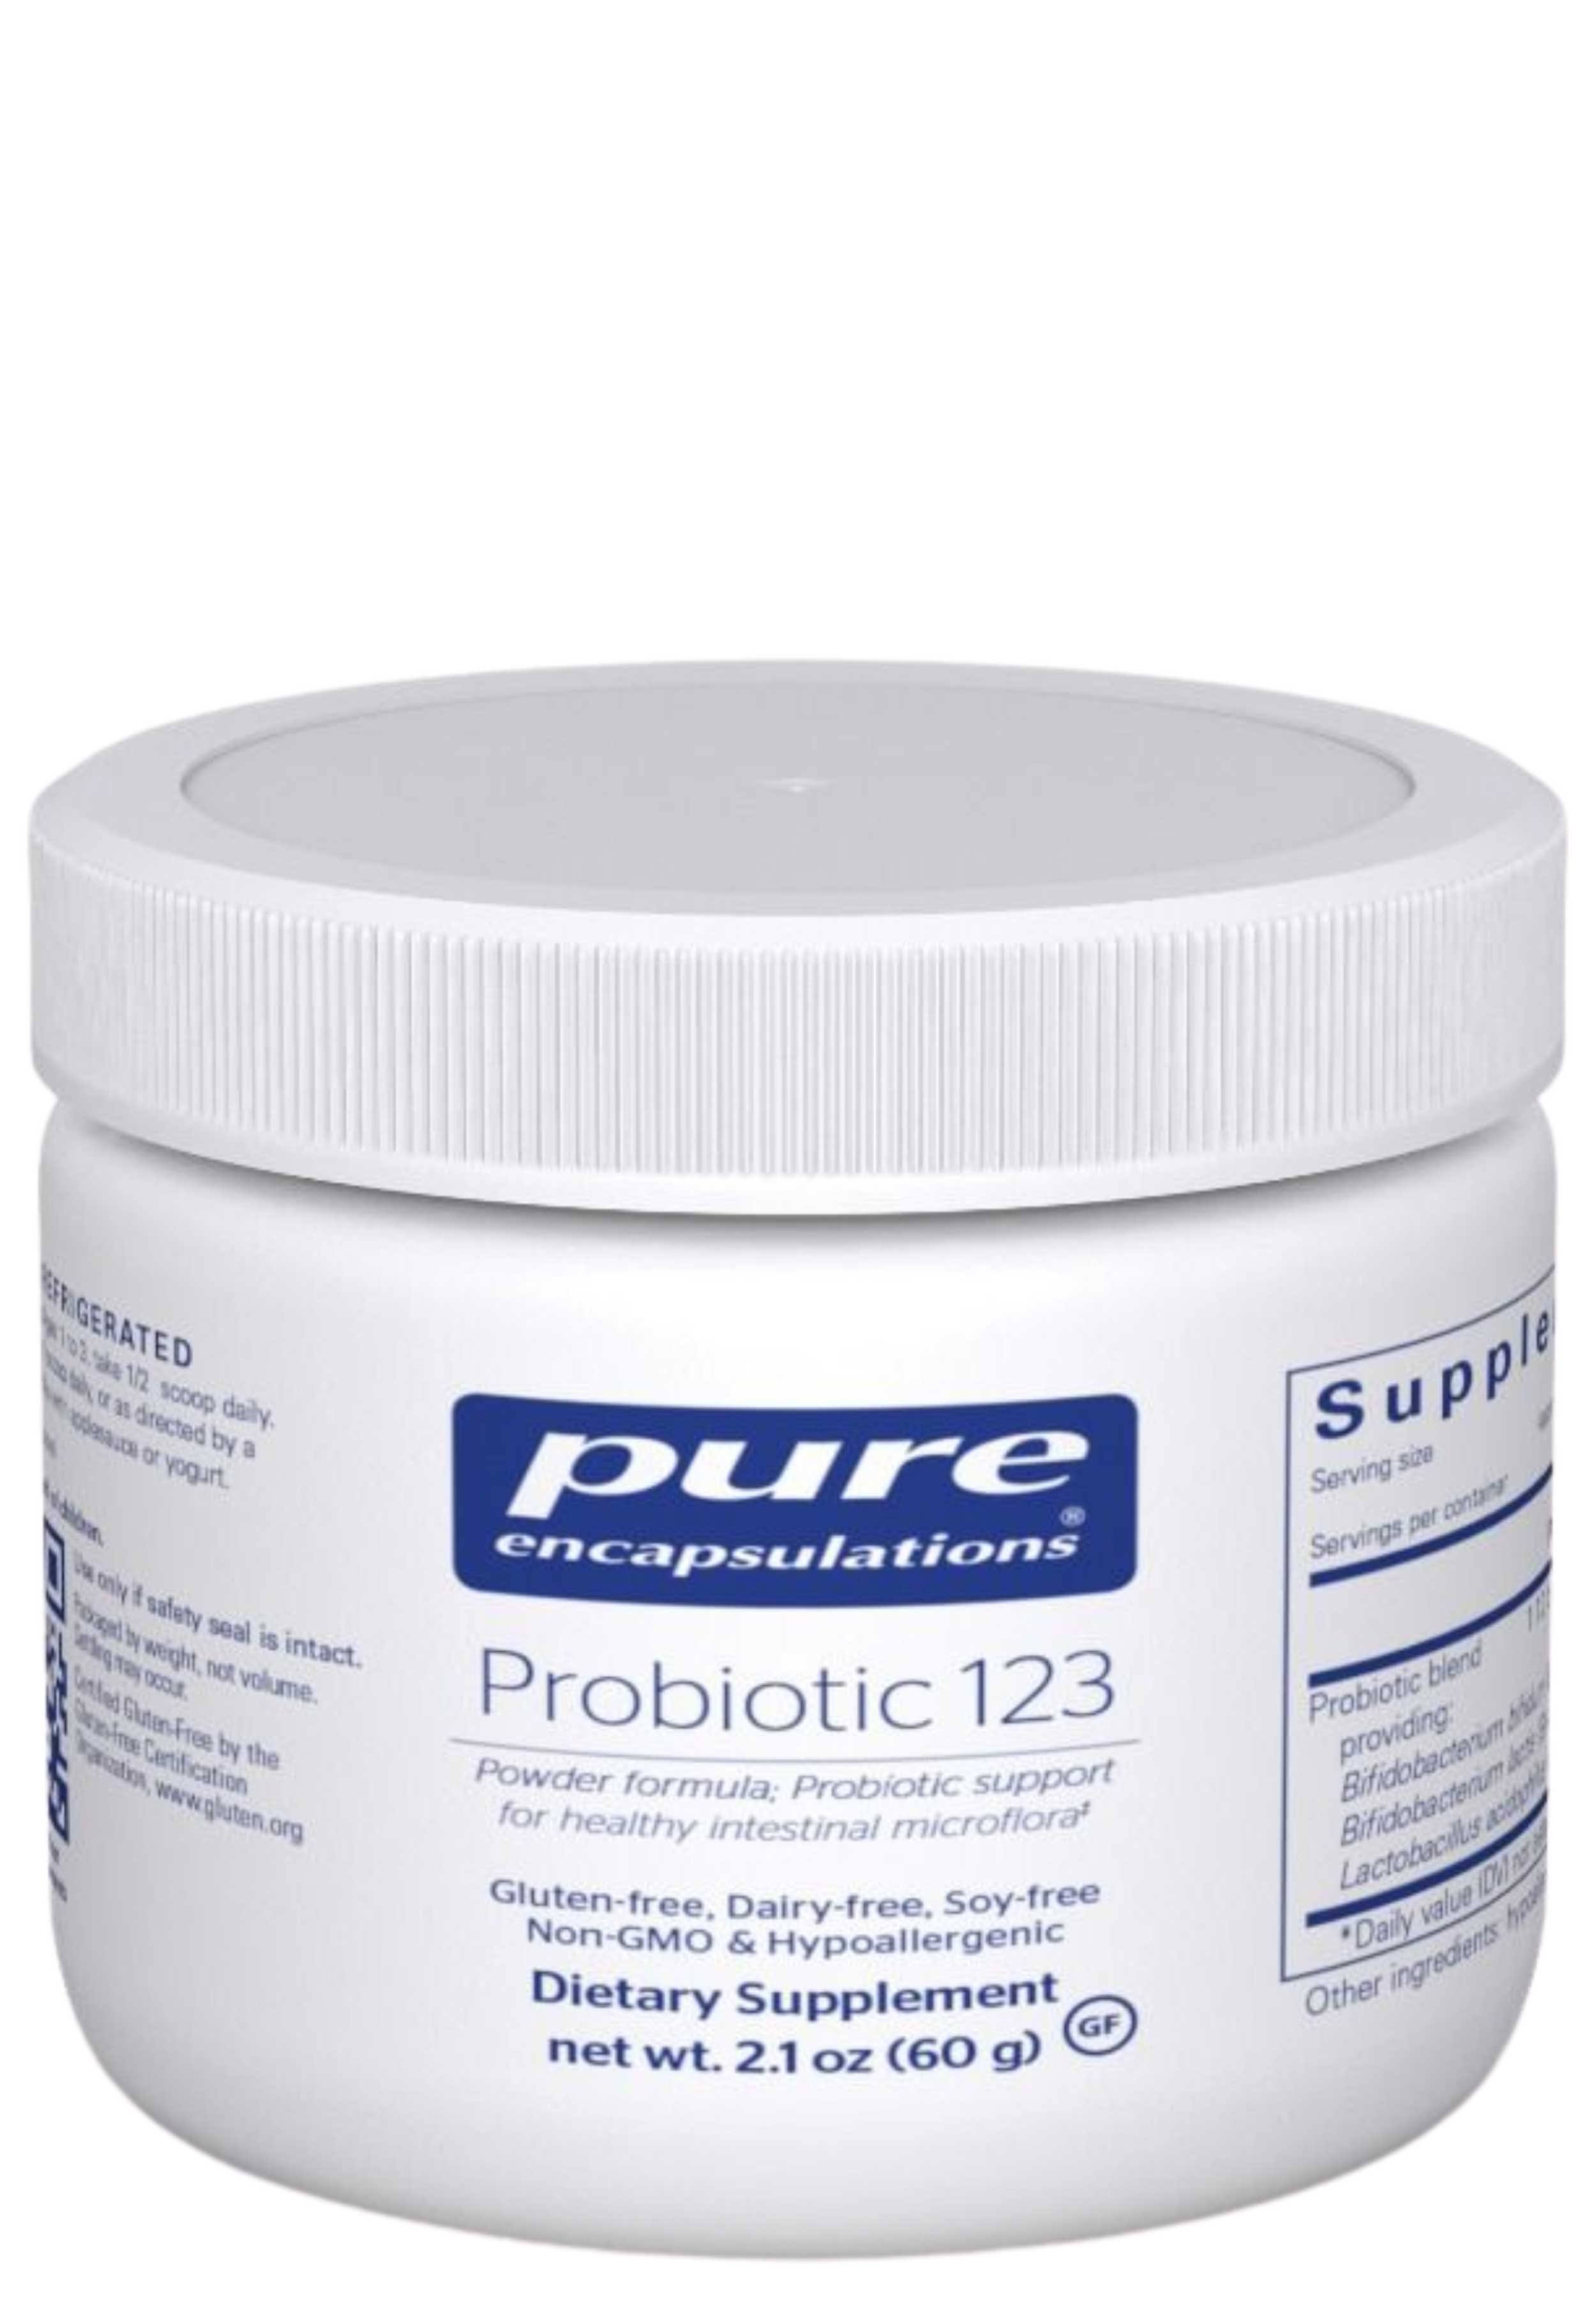 Pure Encapsulations Probiotic 123 Powder - 2.1oz